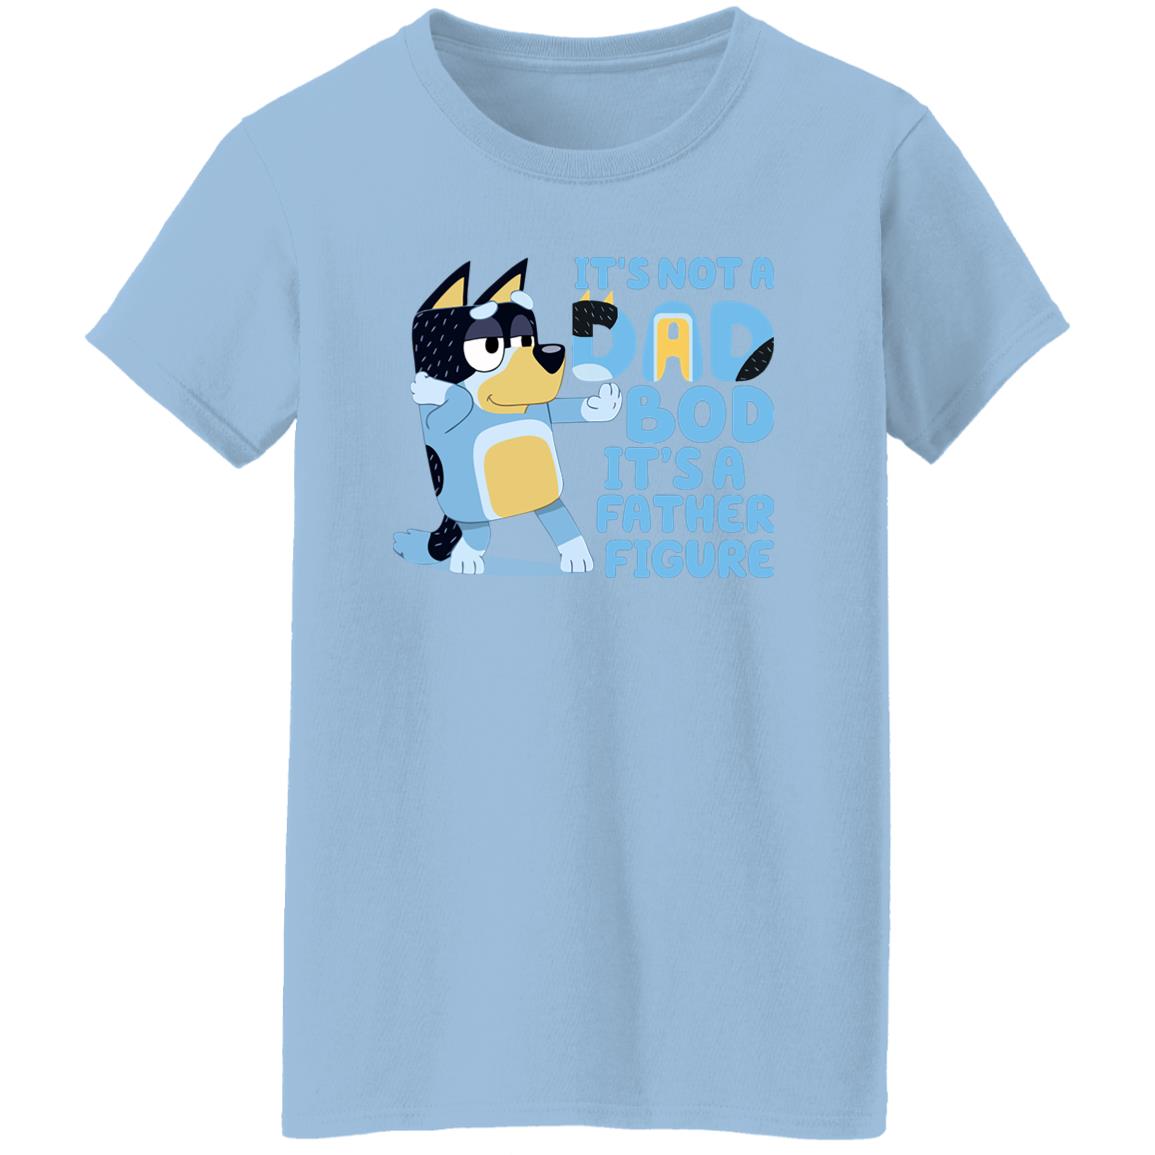  Bluey Dad Papa Shirts For Men, Bluey Shirt Adult